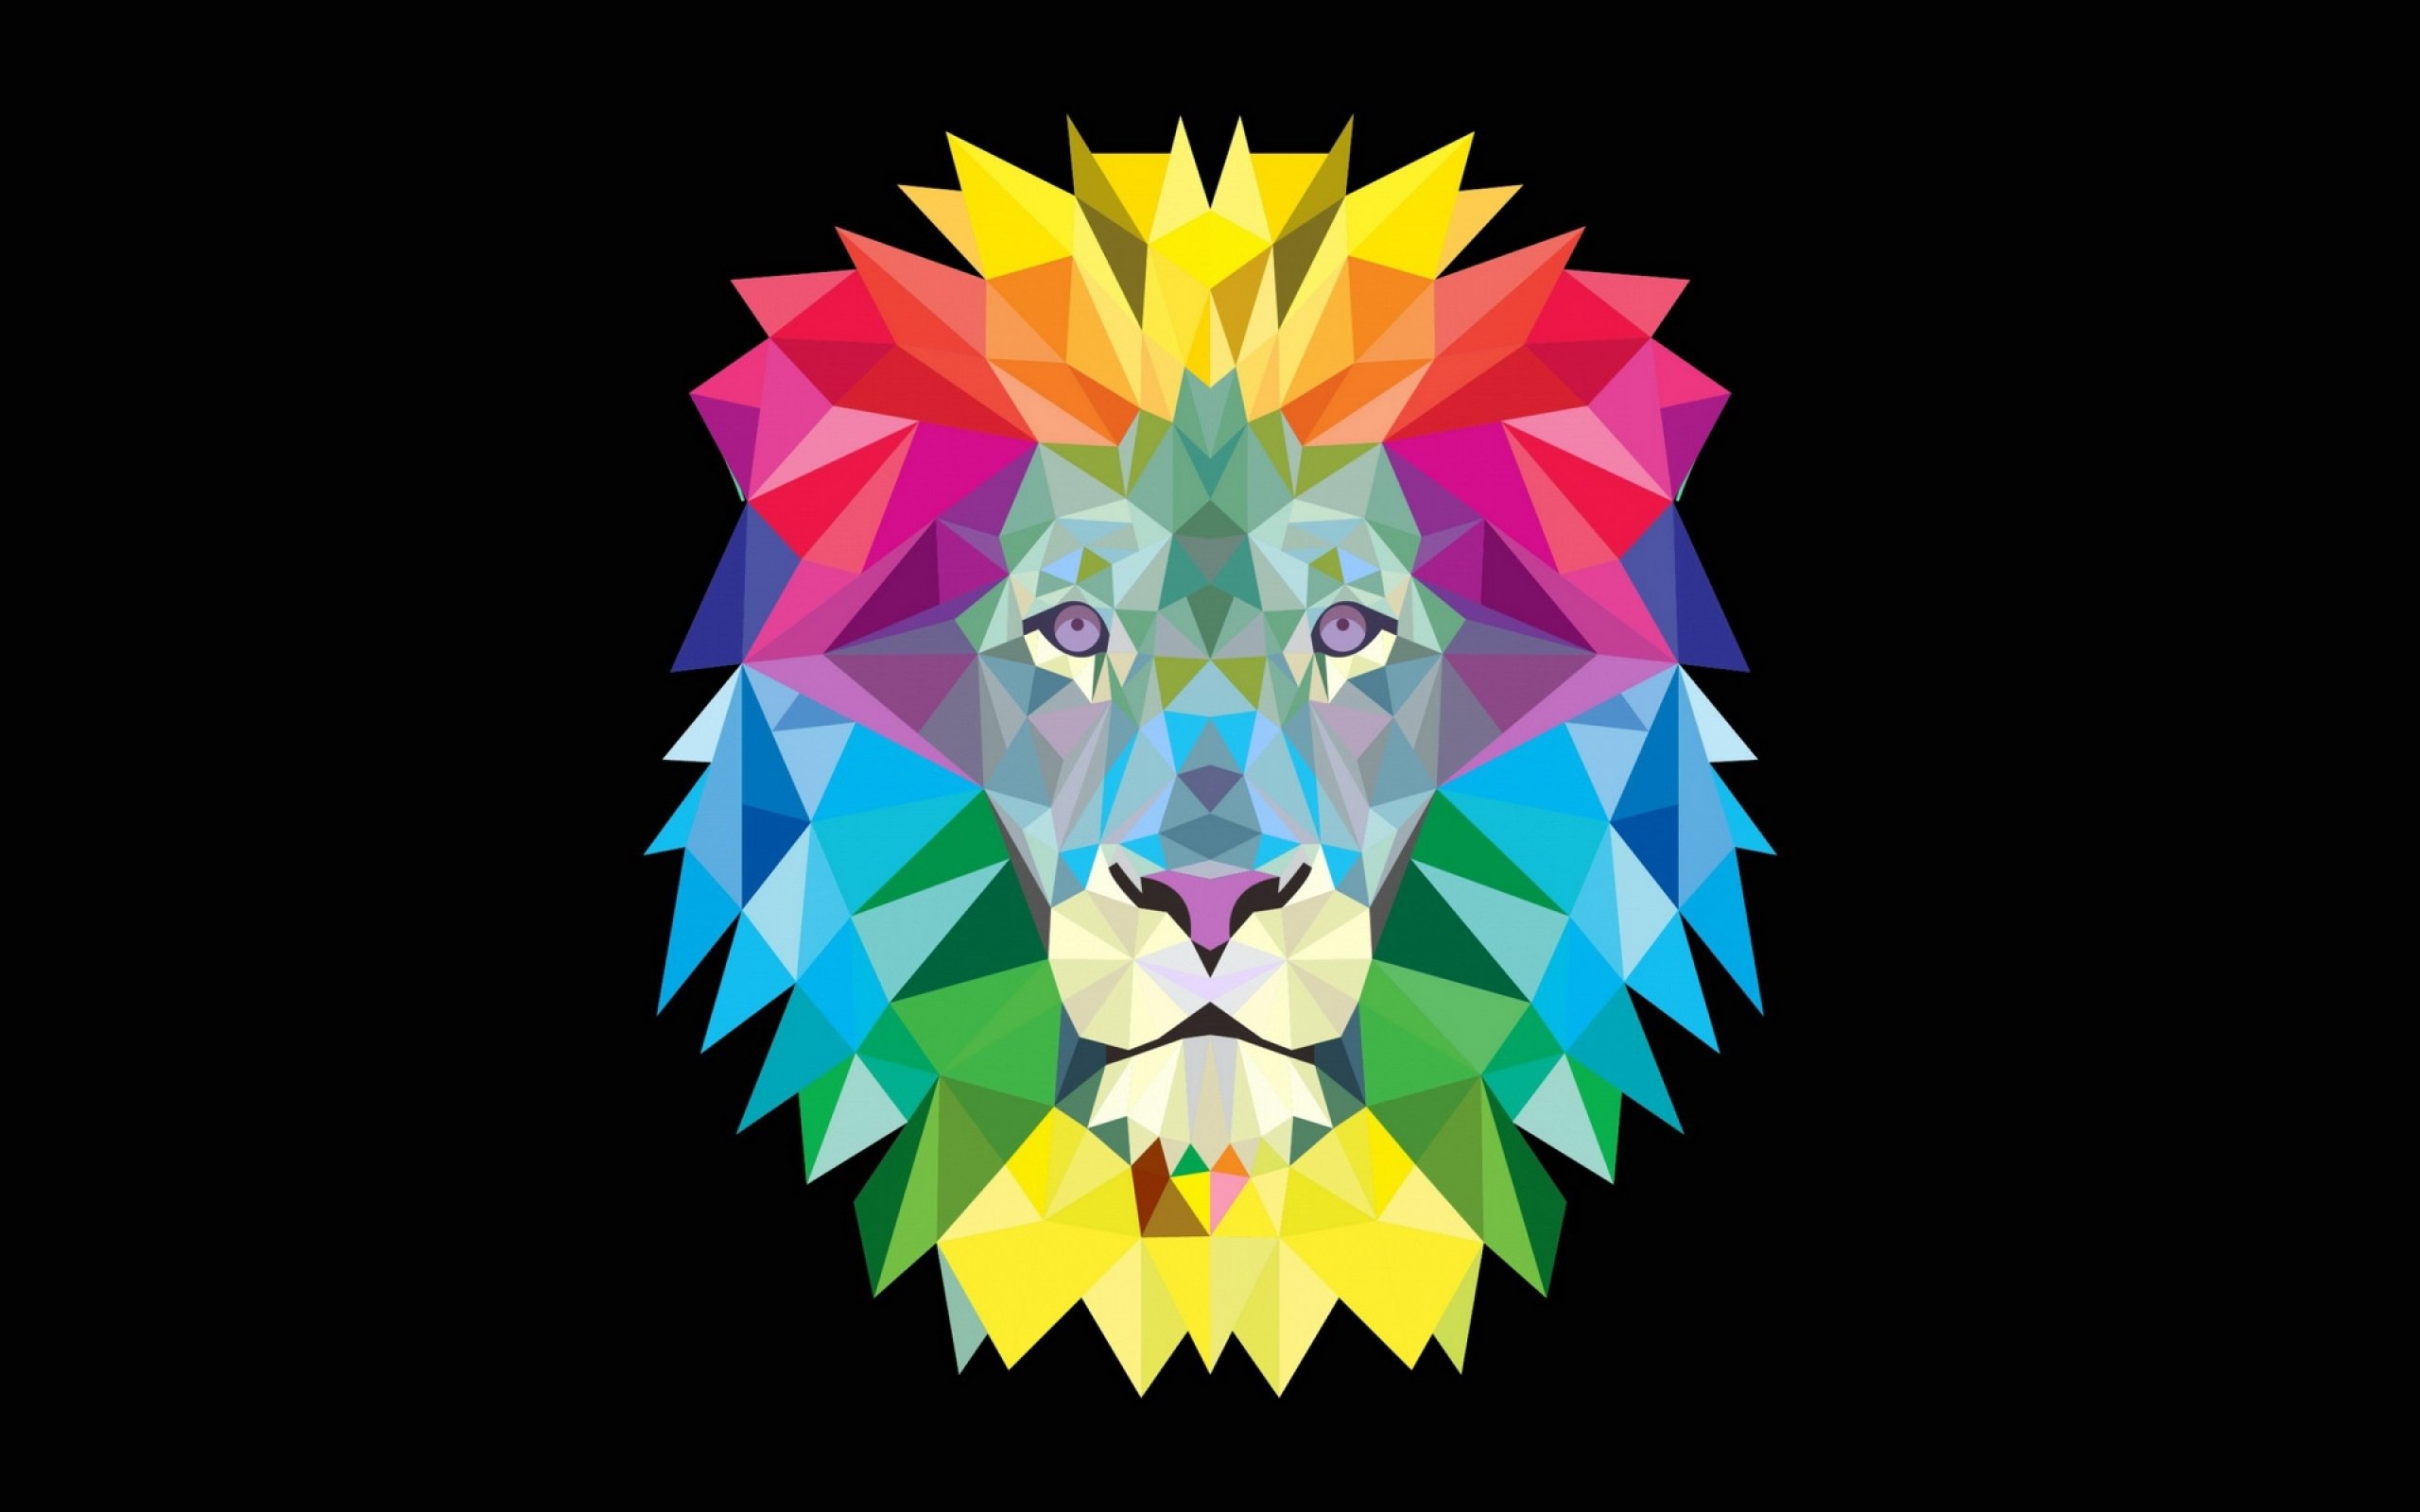 lion, Lions, Predator, Carnivore, Cat, Cats Wallpaper